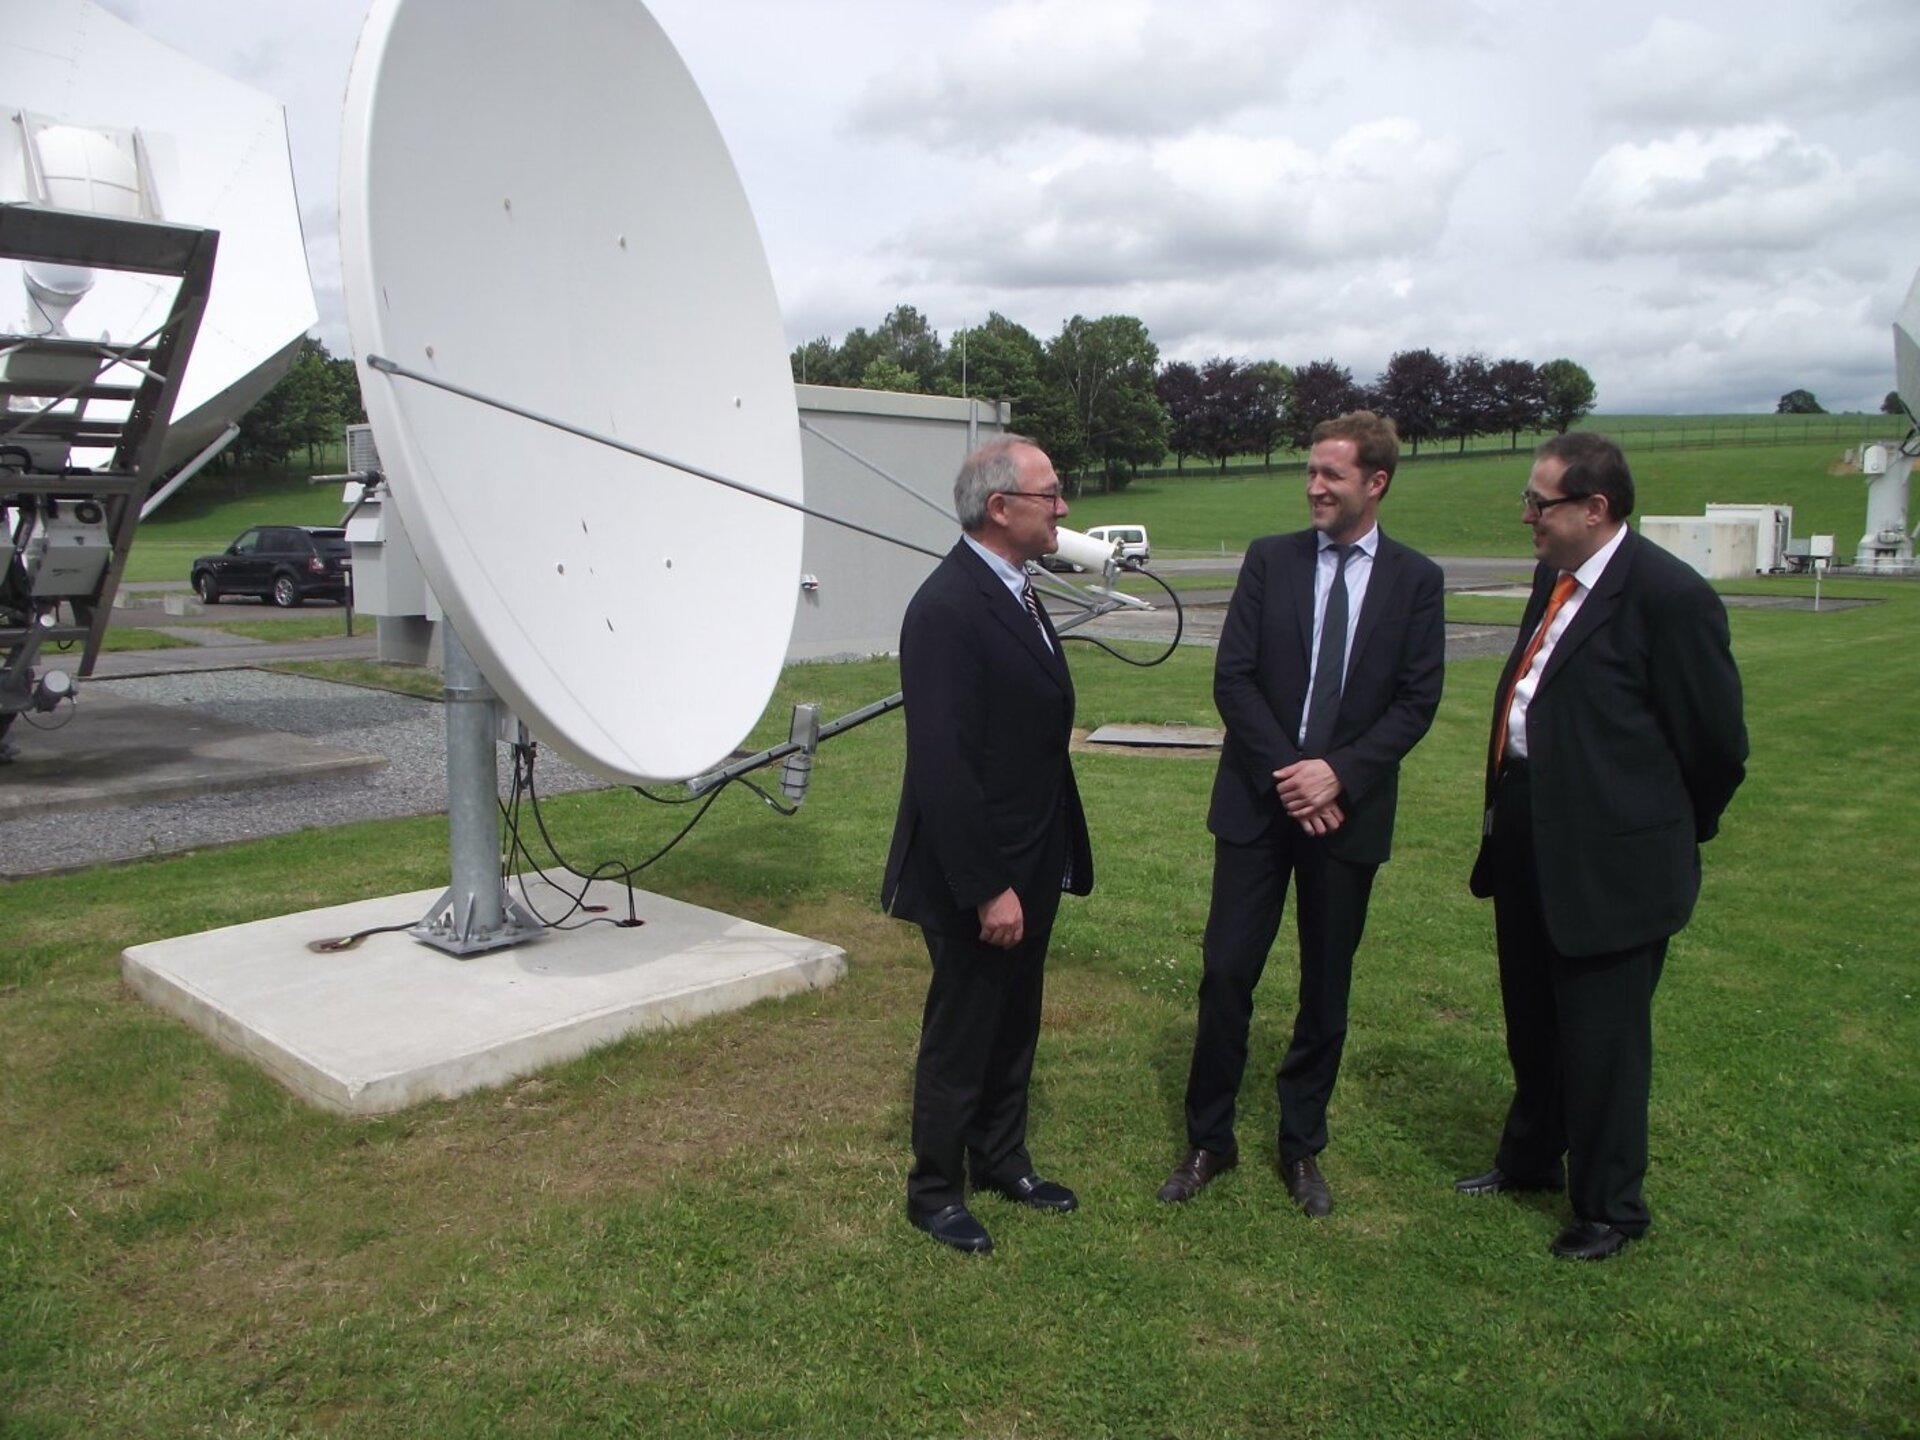 Jean-Jacques Dordain, Director General of ESA, Paul Magnette, Belgian Minister for Science Policy, and Daniele Galardini, Head of ESA Redu Center